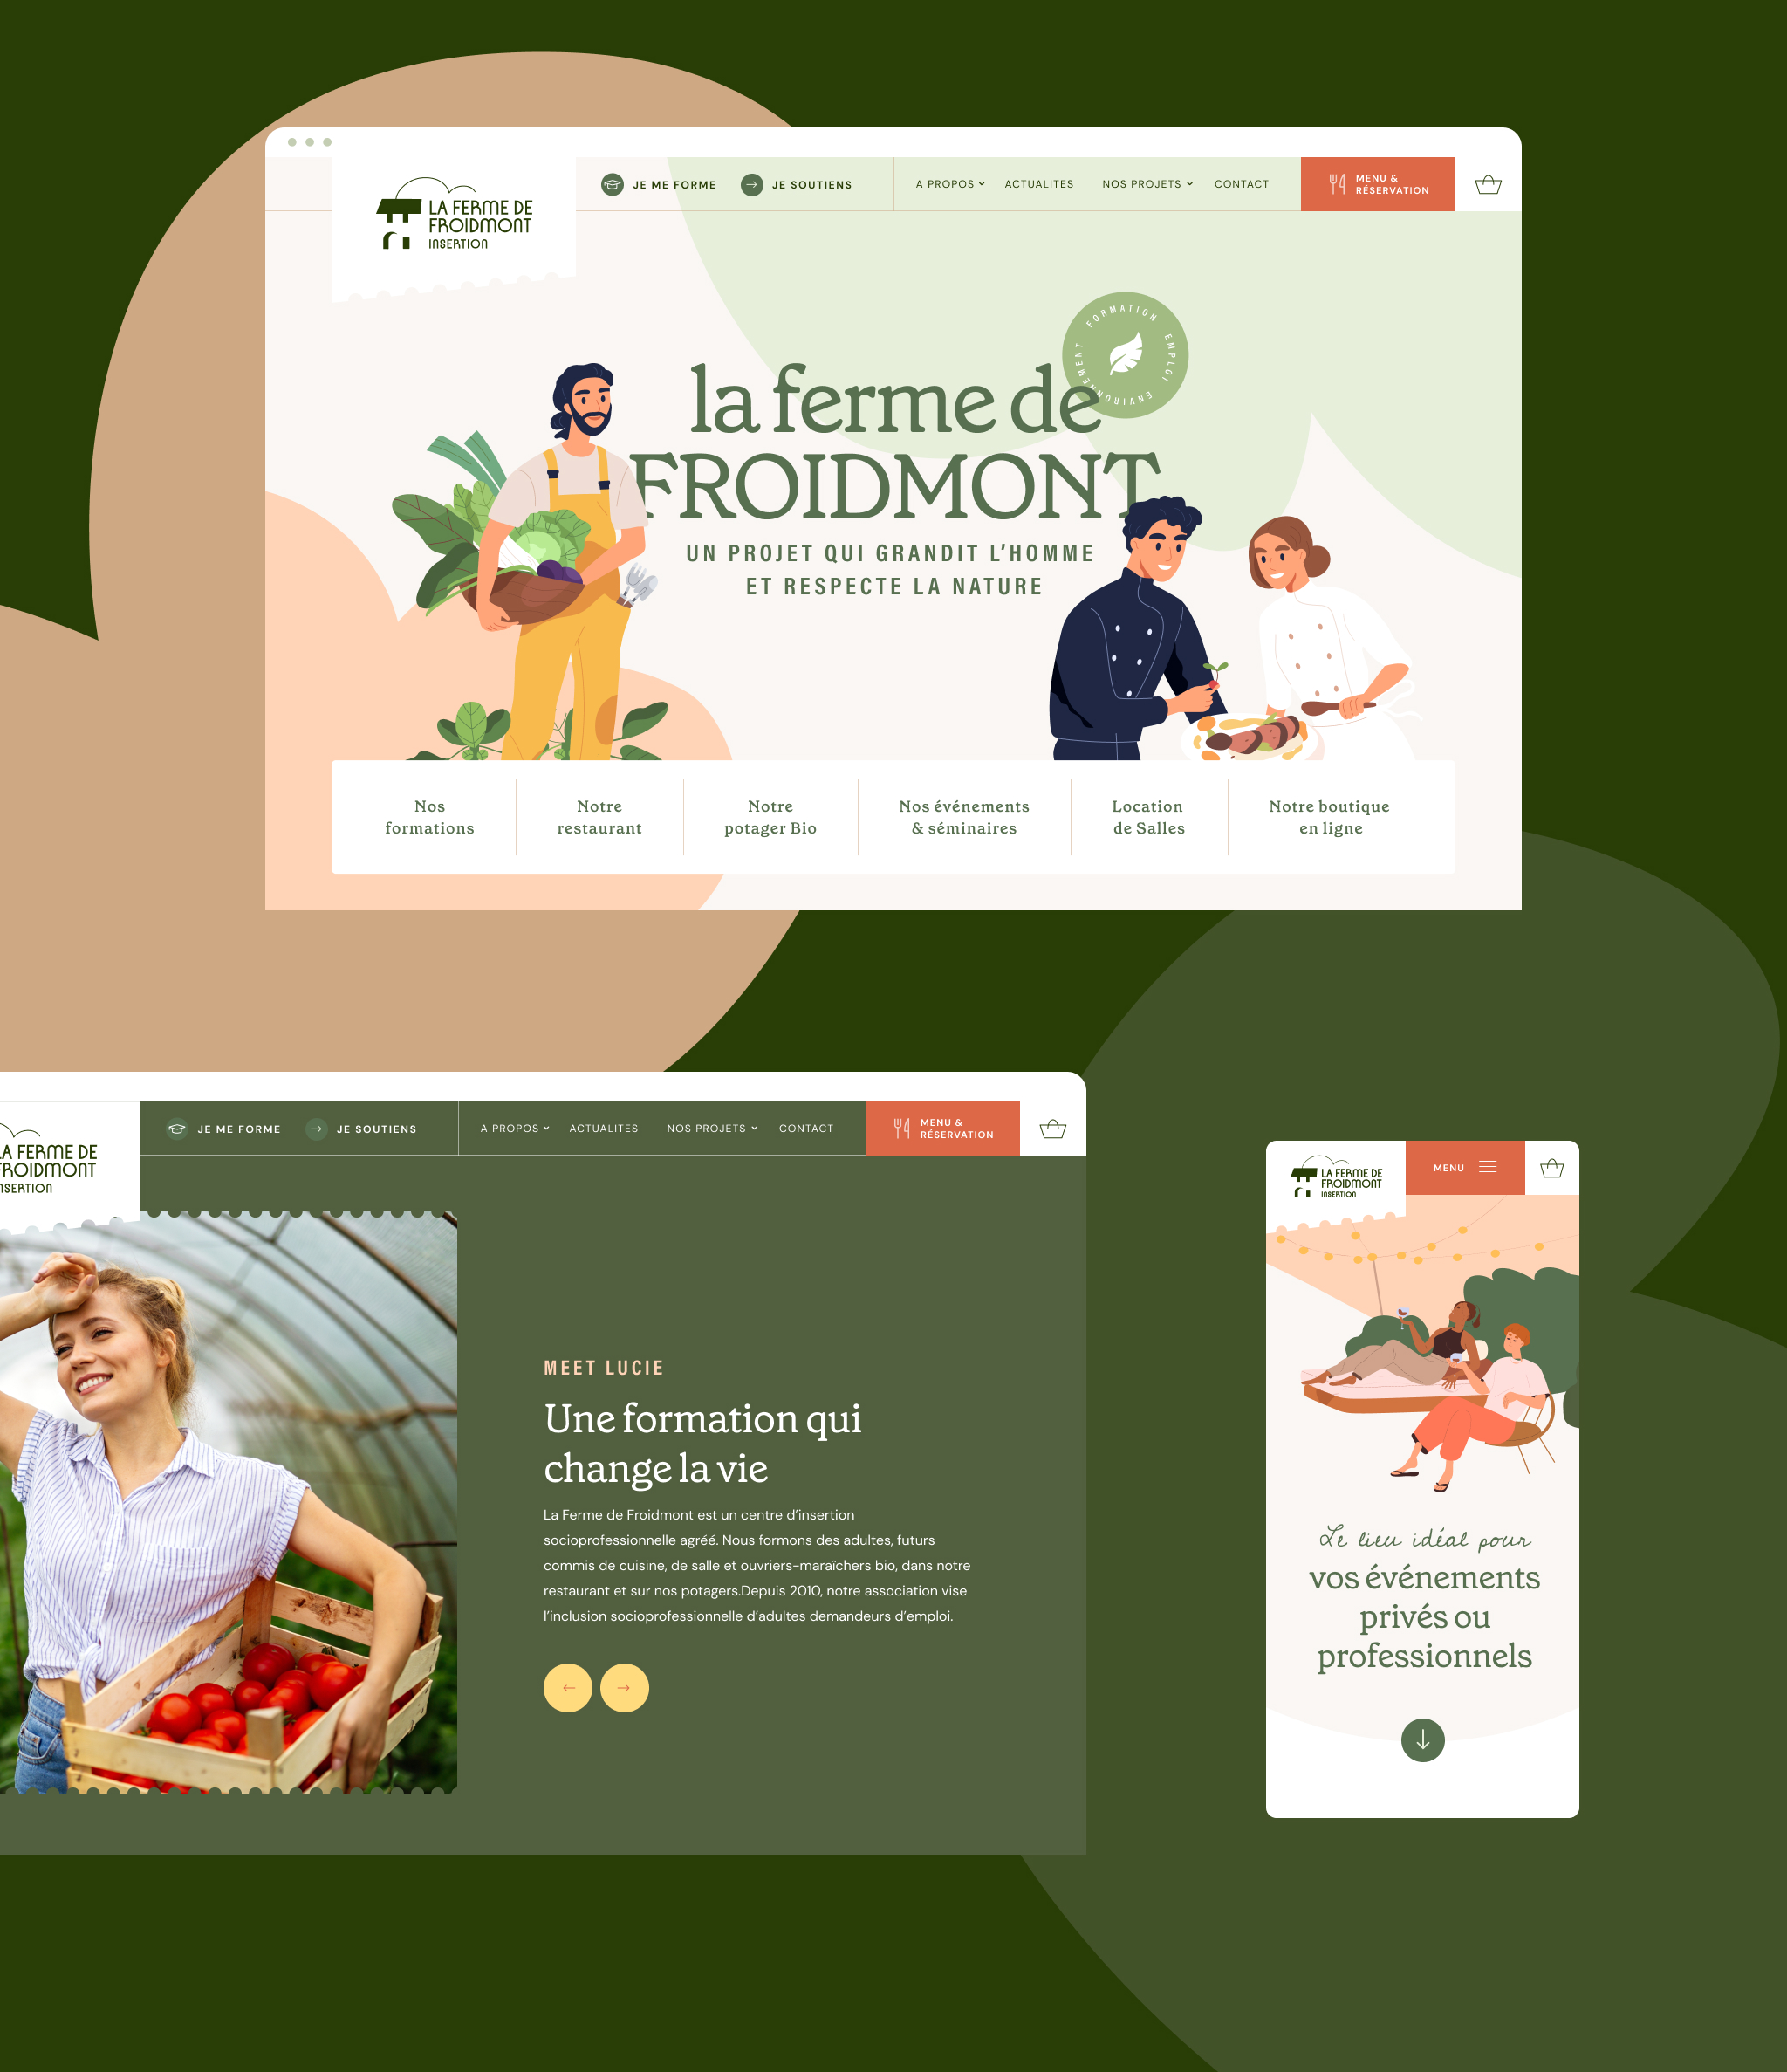 Froidmont website designed by Atelier Design communication agency Brussels